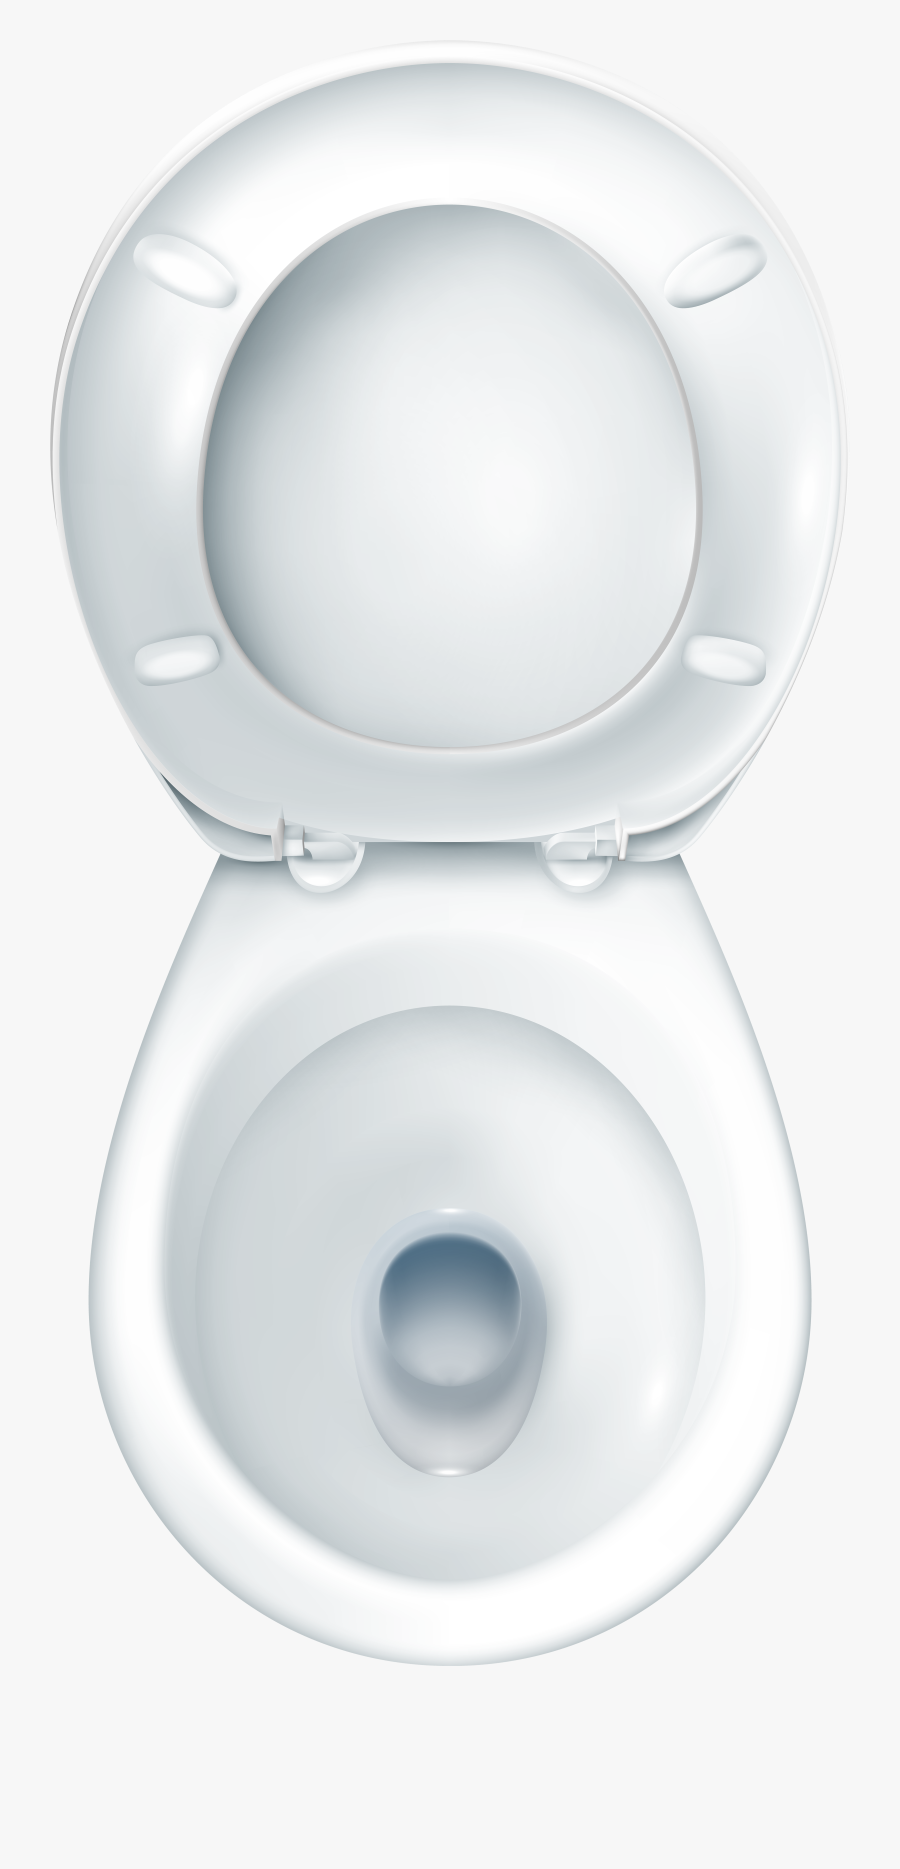 Round Toilet Png Clip Art - Toilet Birds Eye View, Transparent Clipart